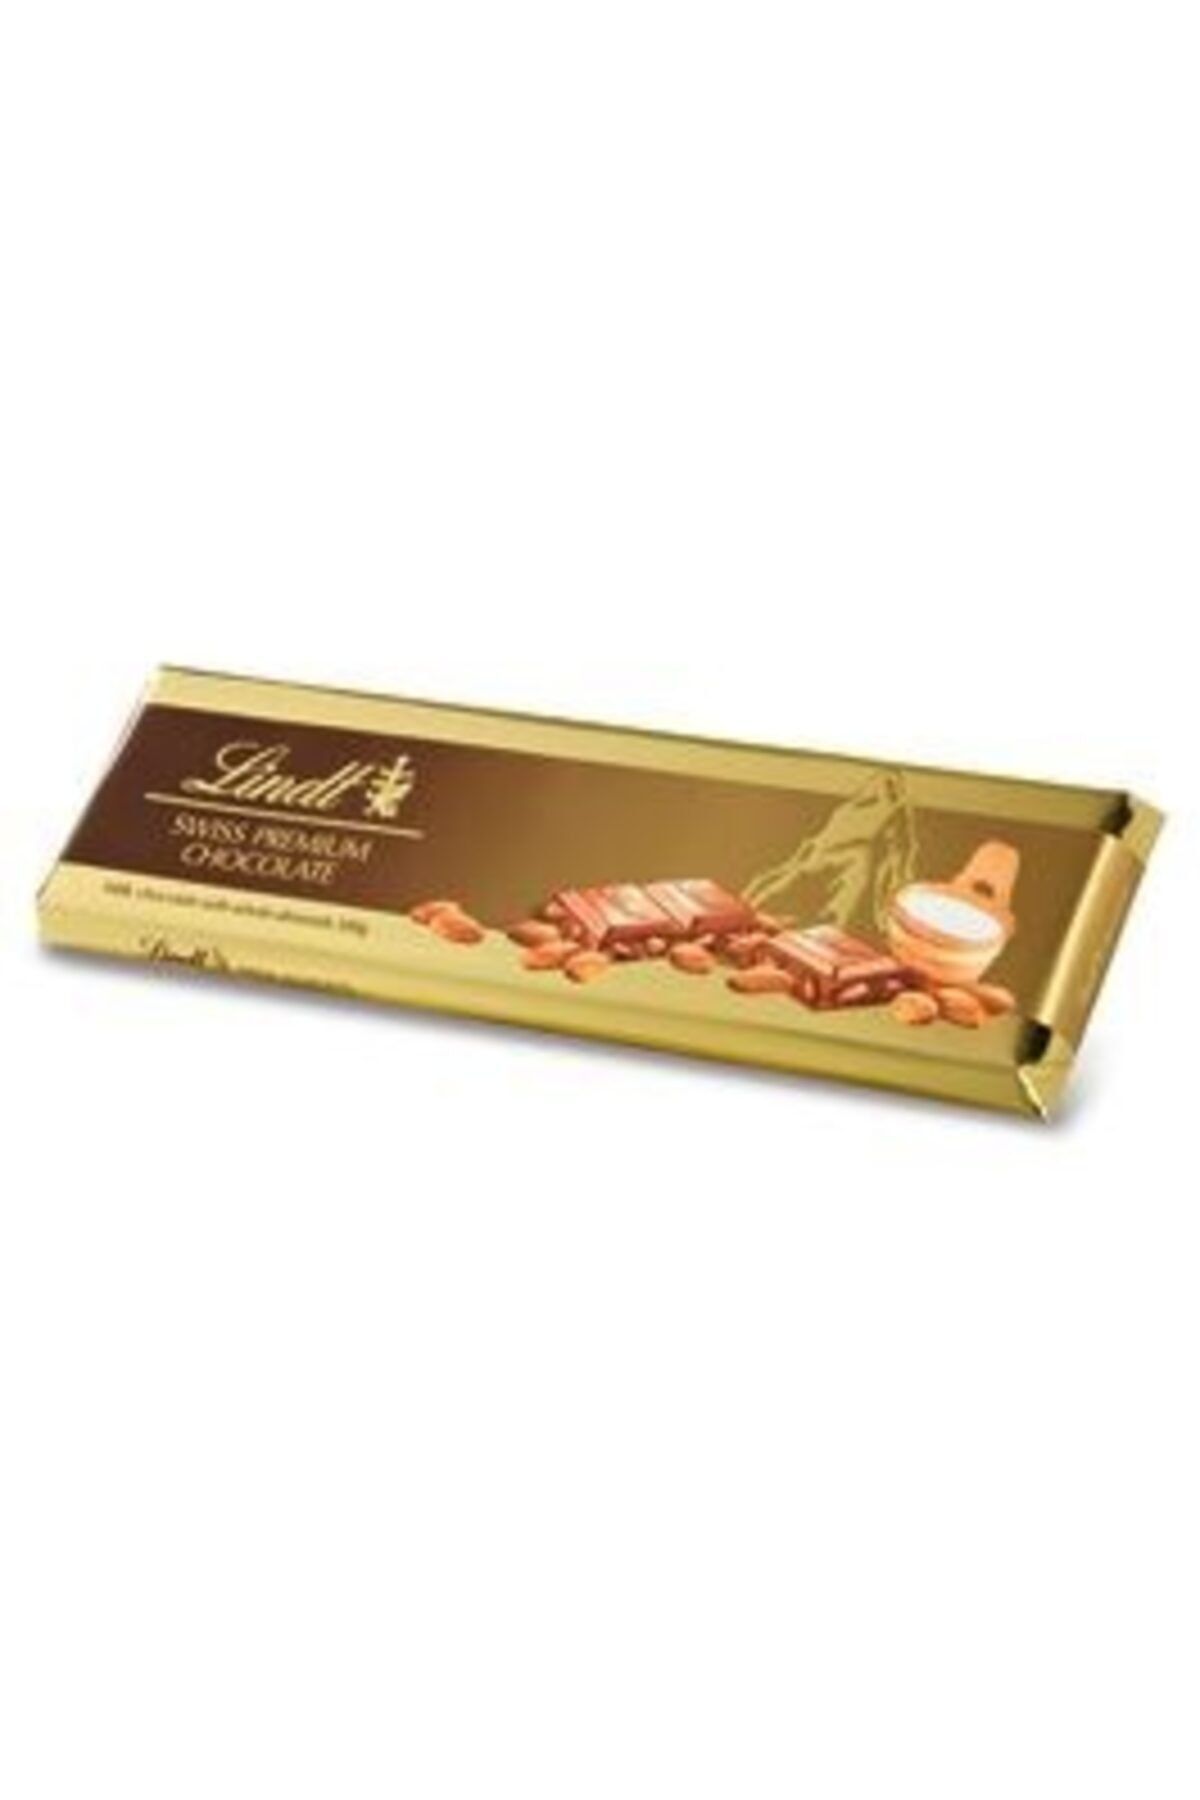 Lindt Swiss Kavrulmuş Bütün Bademli (%15) Sütlü Çikolata 300gr